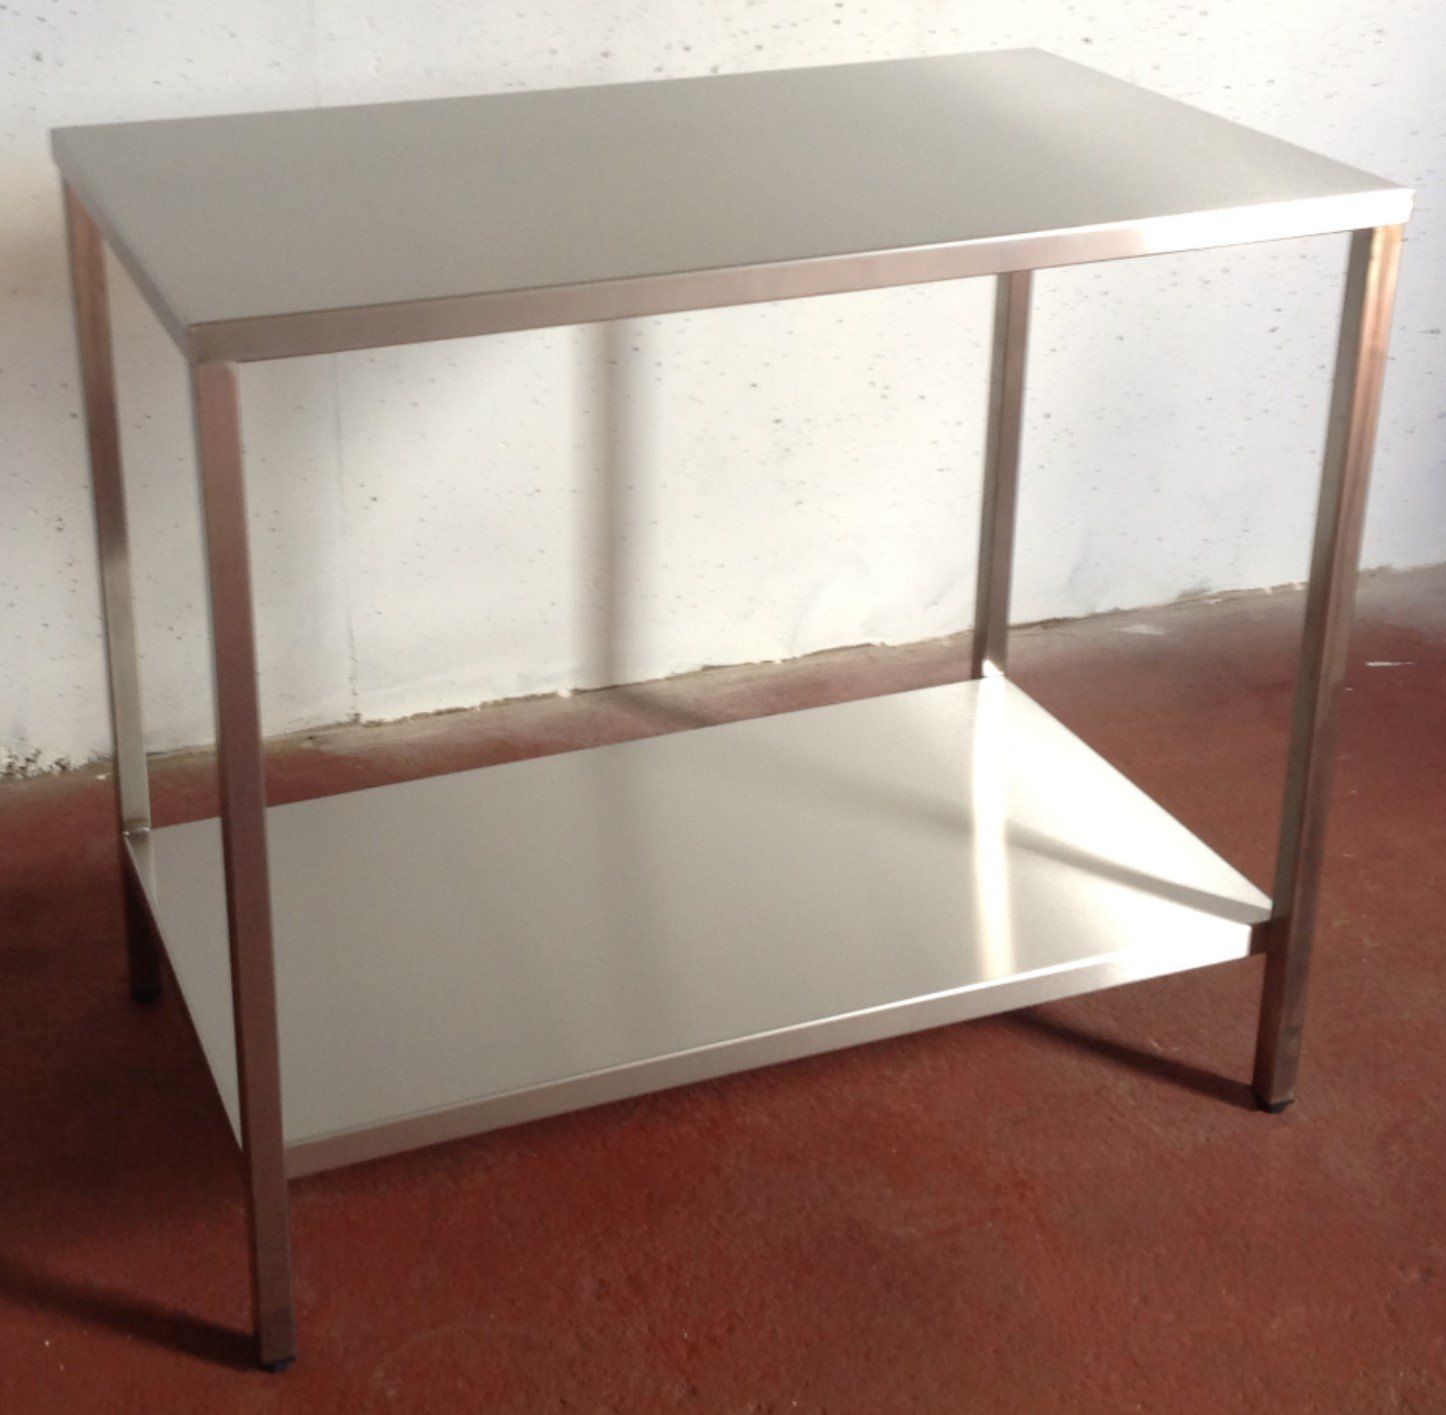 bespoke stainless steel medical tables, bespoke stainless steel cleanroom tables